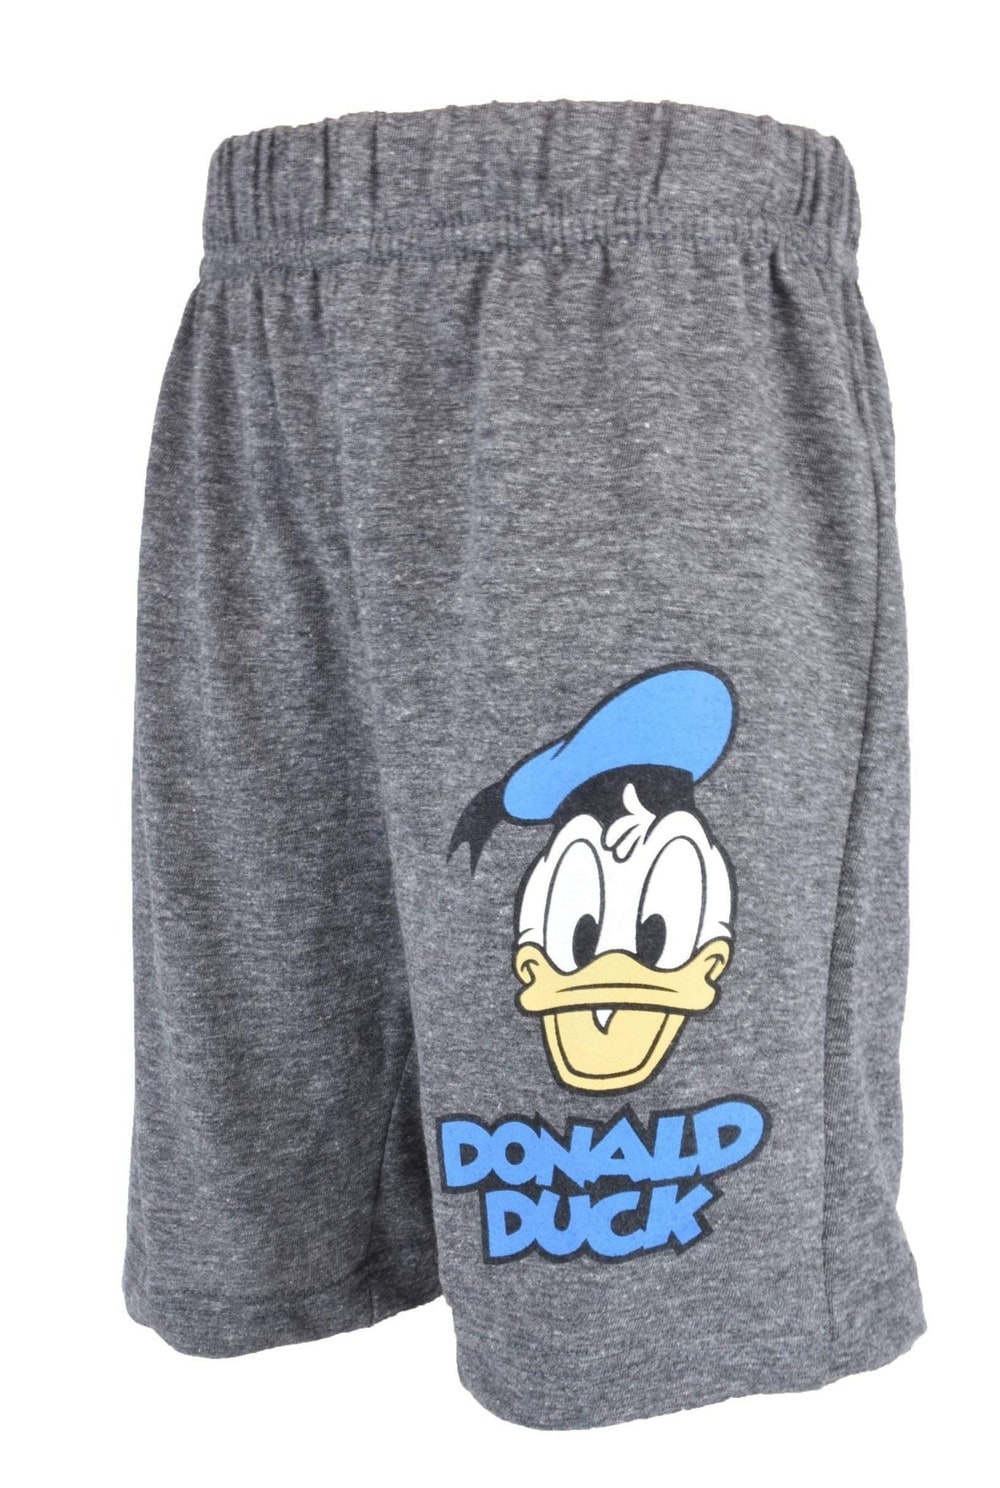 Donald Duck Disney®️ Character Boys Short For Kids Disney Anti-Heat rash Cool Graphic printed Short - Dealz Souq